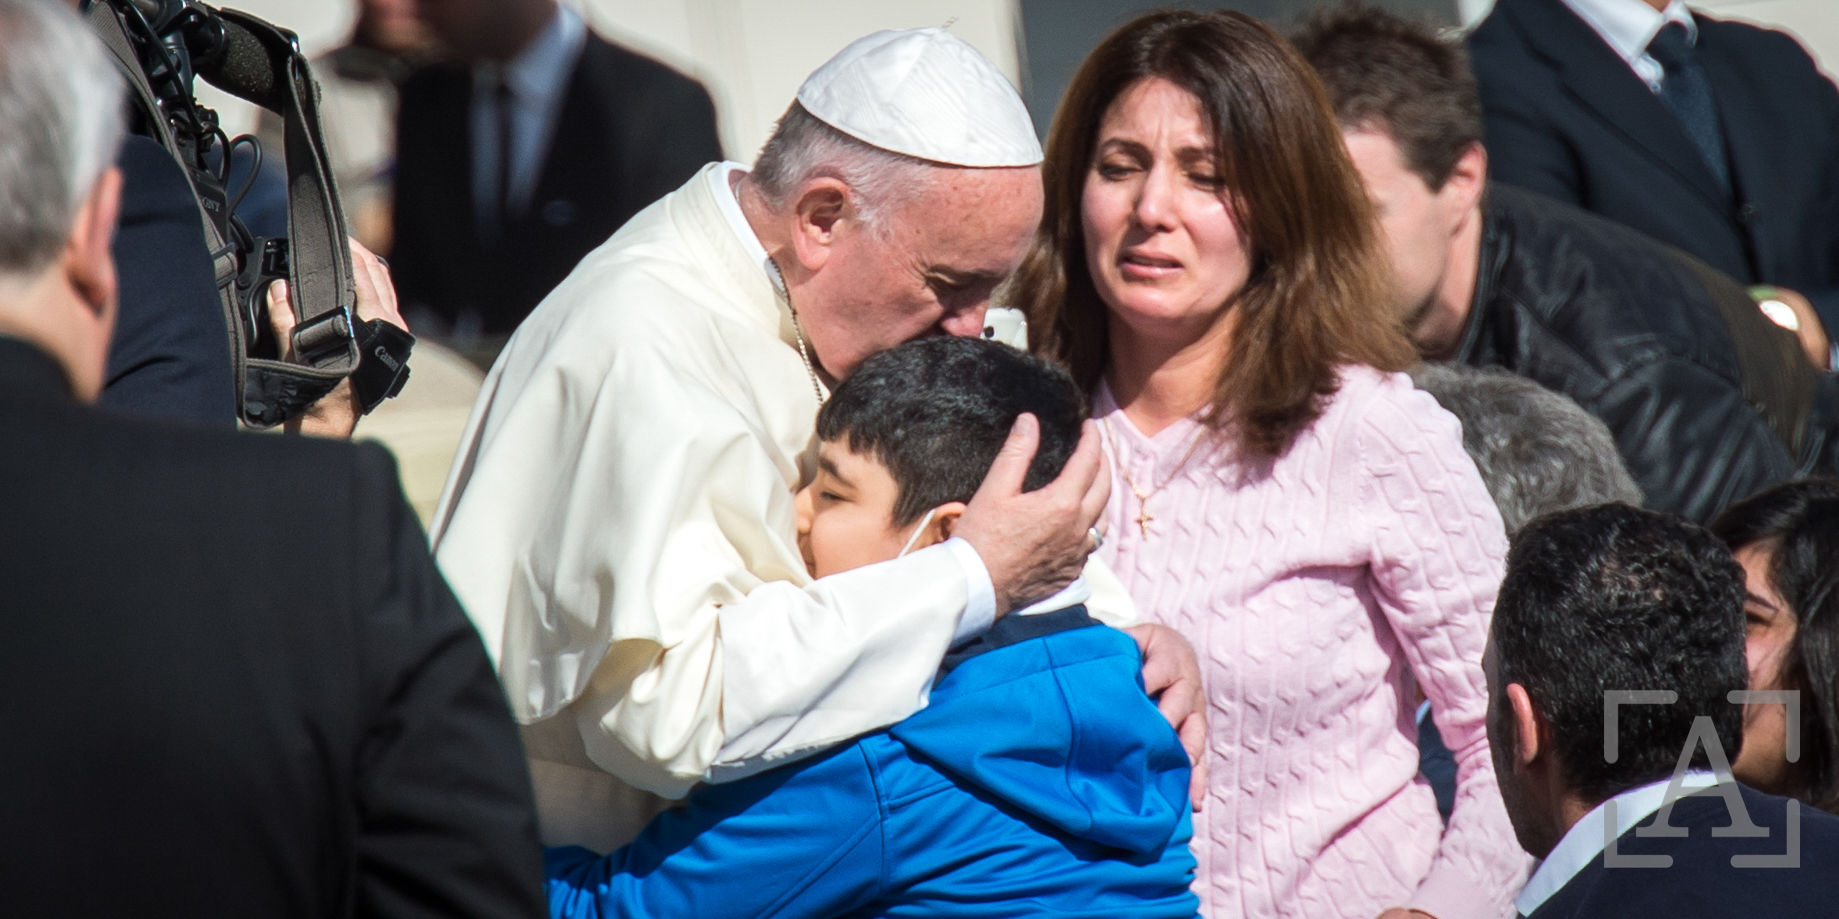 A sick Boy hug’s Pope Francis